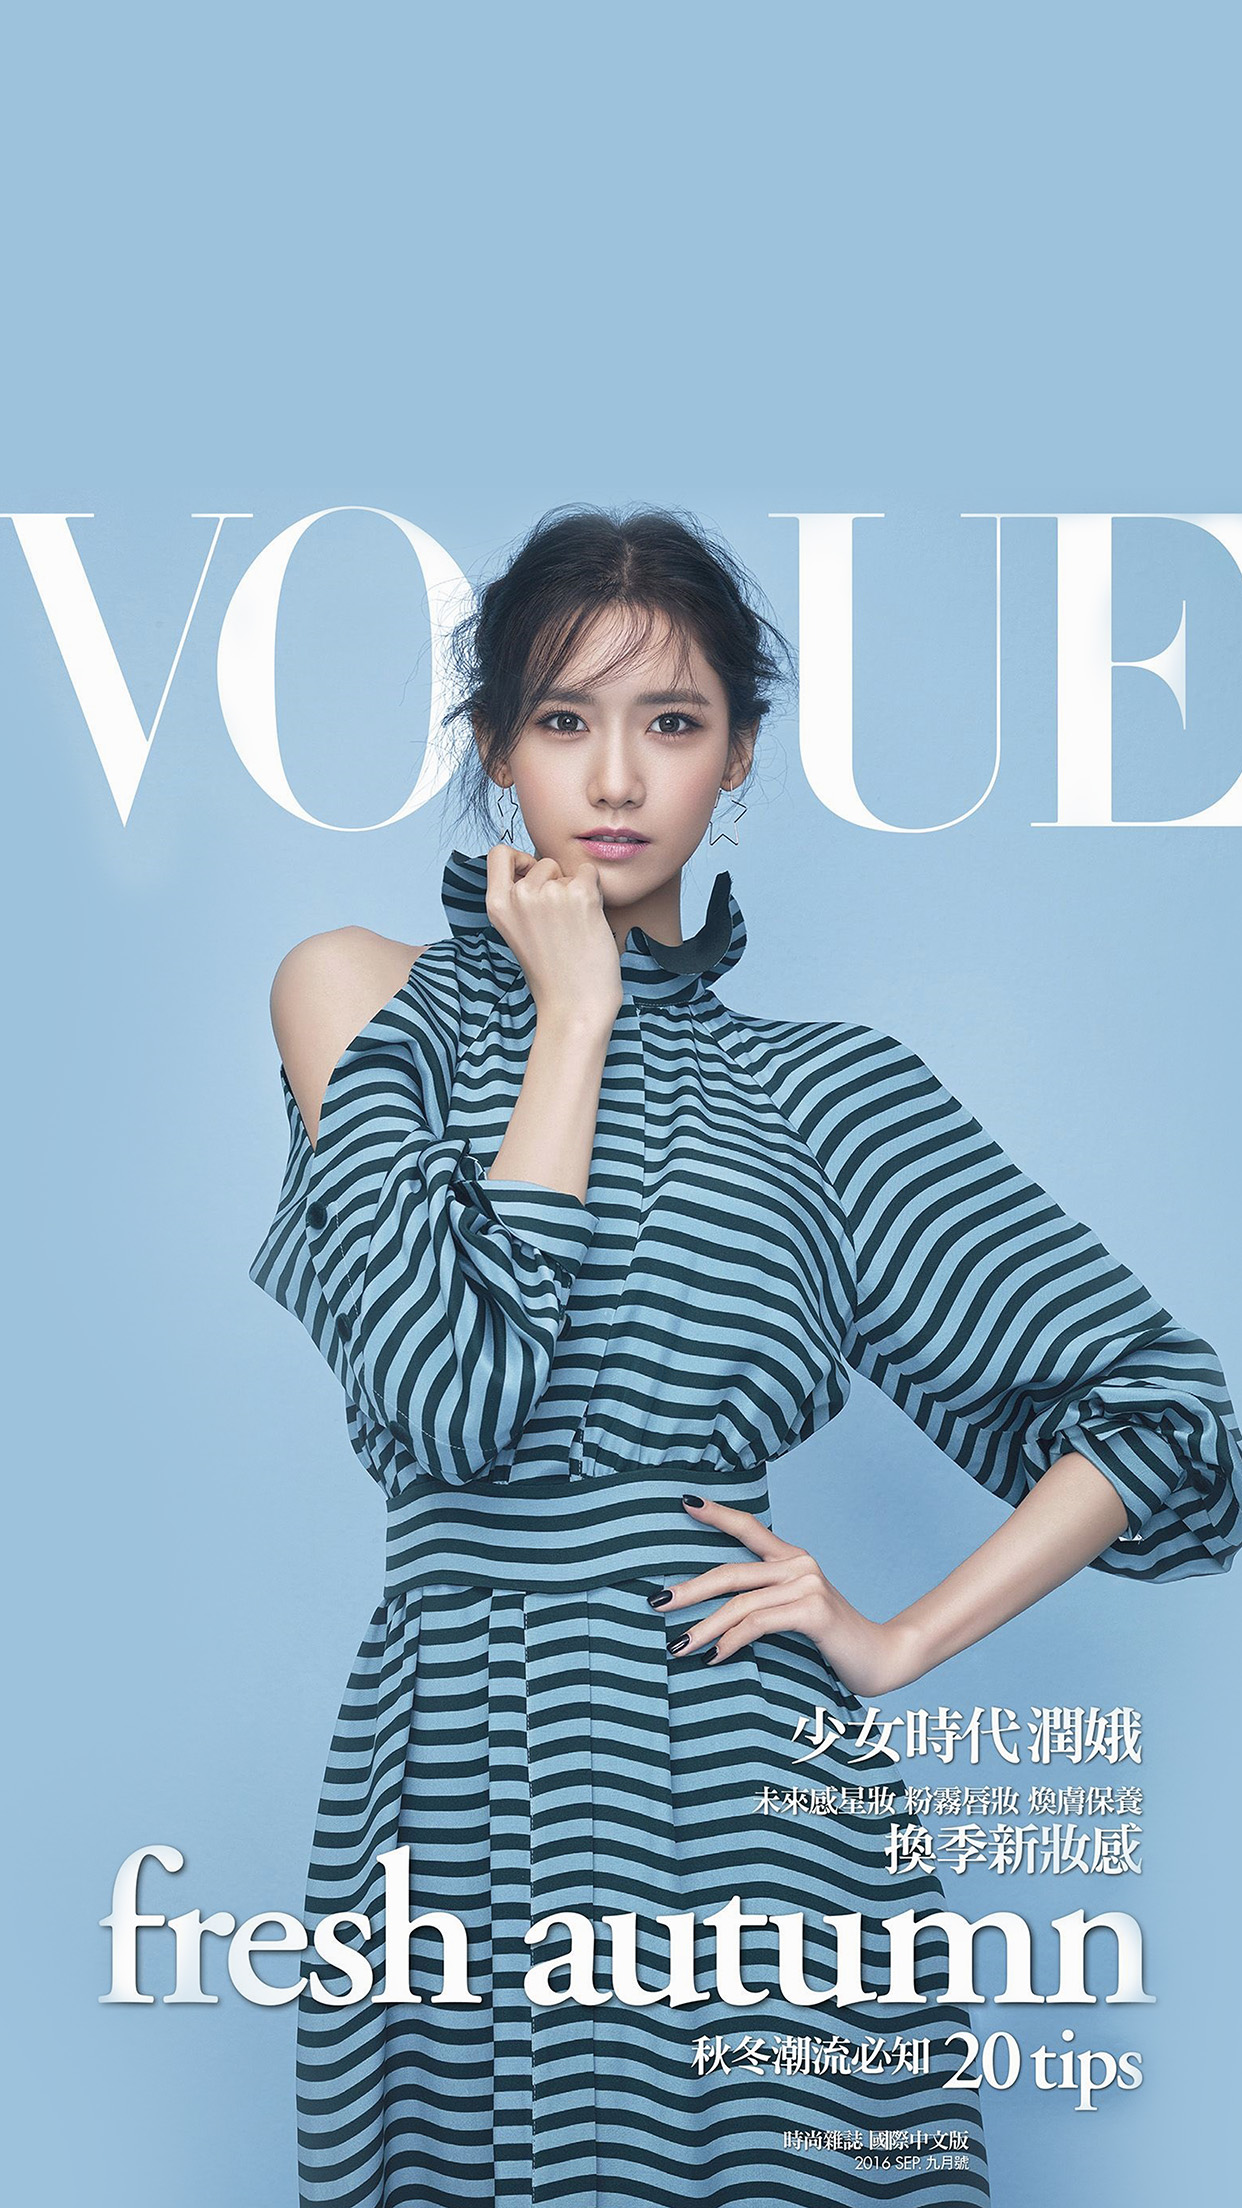 Snsd Kpop Girl Yoona Magazine Photo Android wallpaper